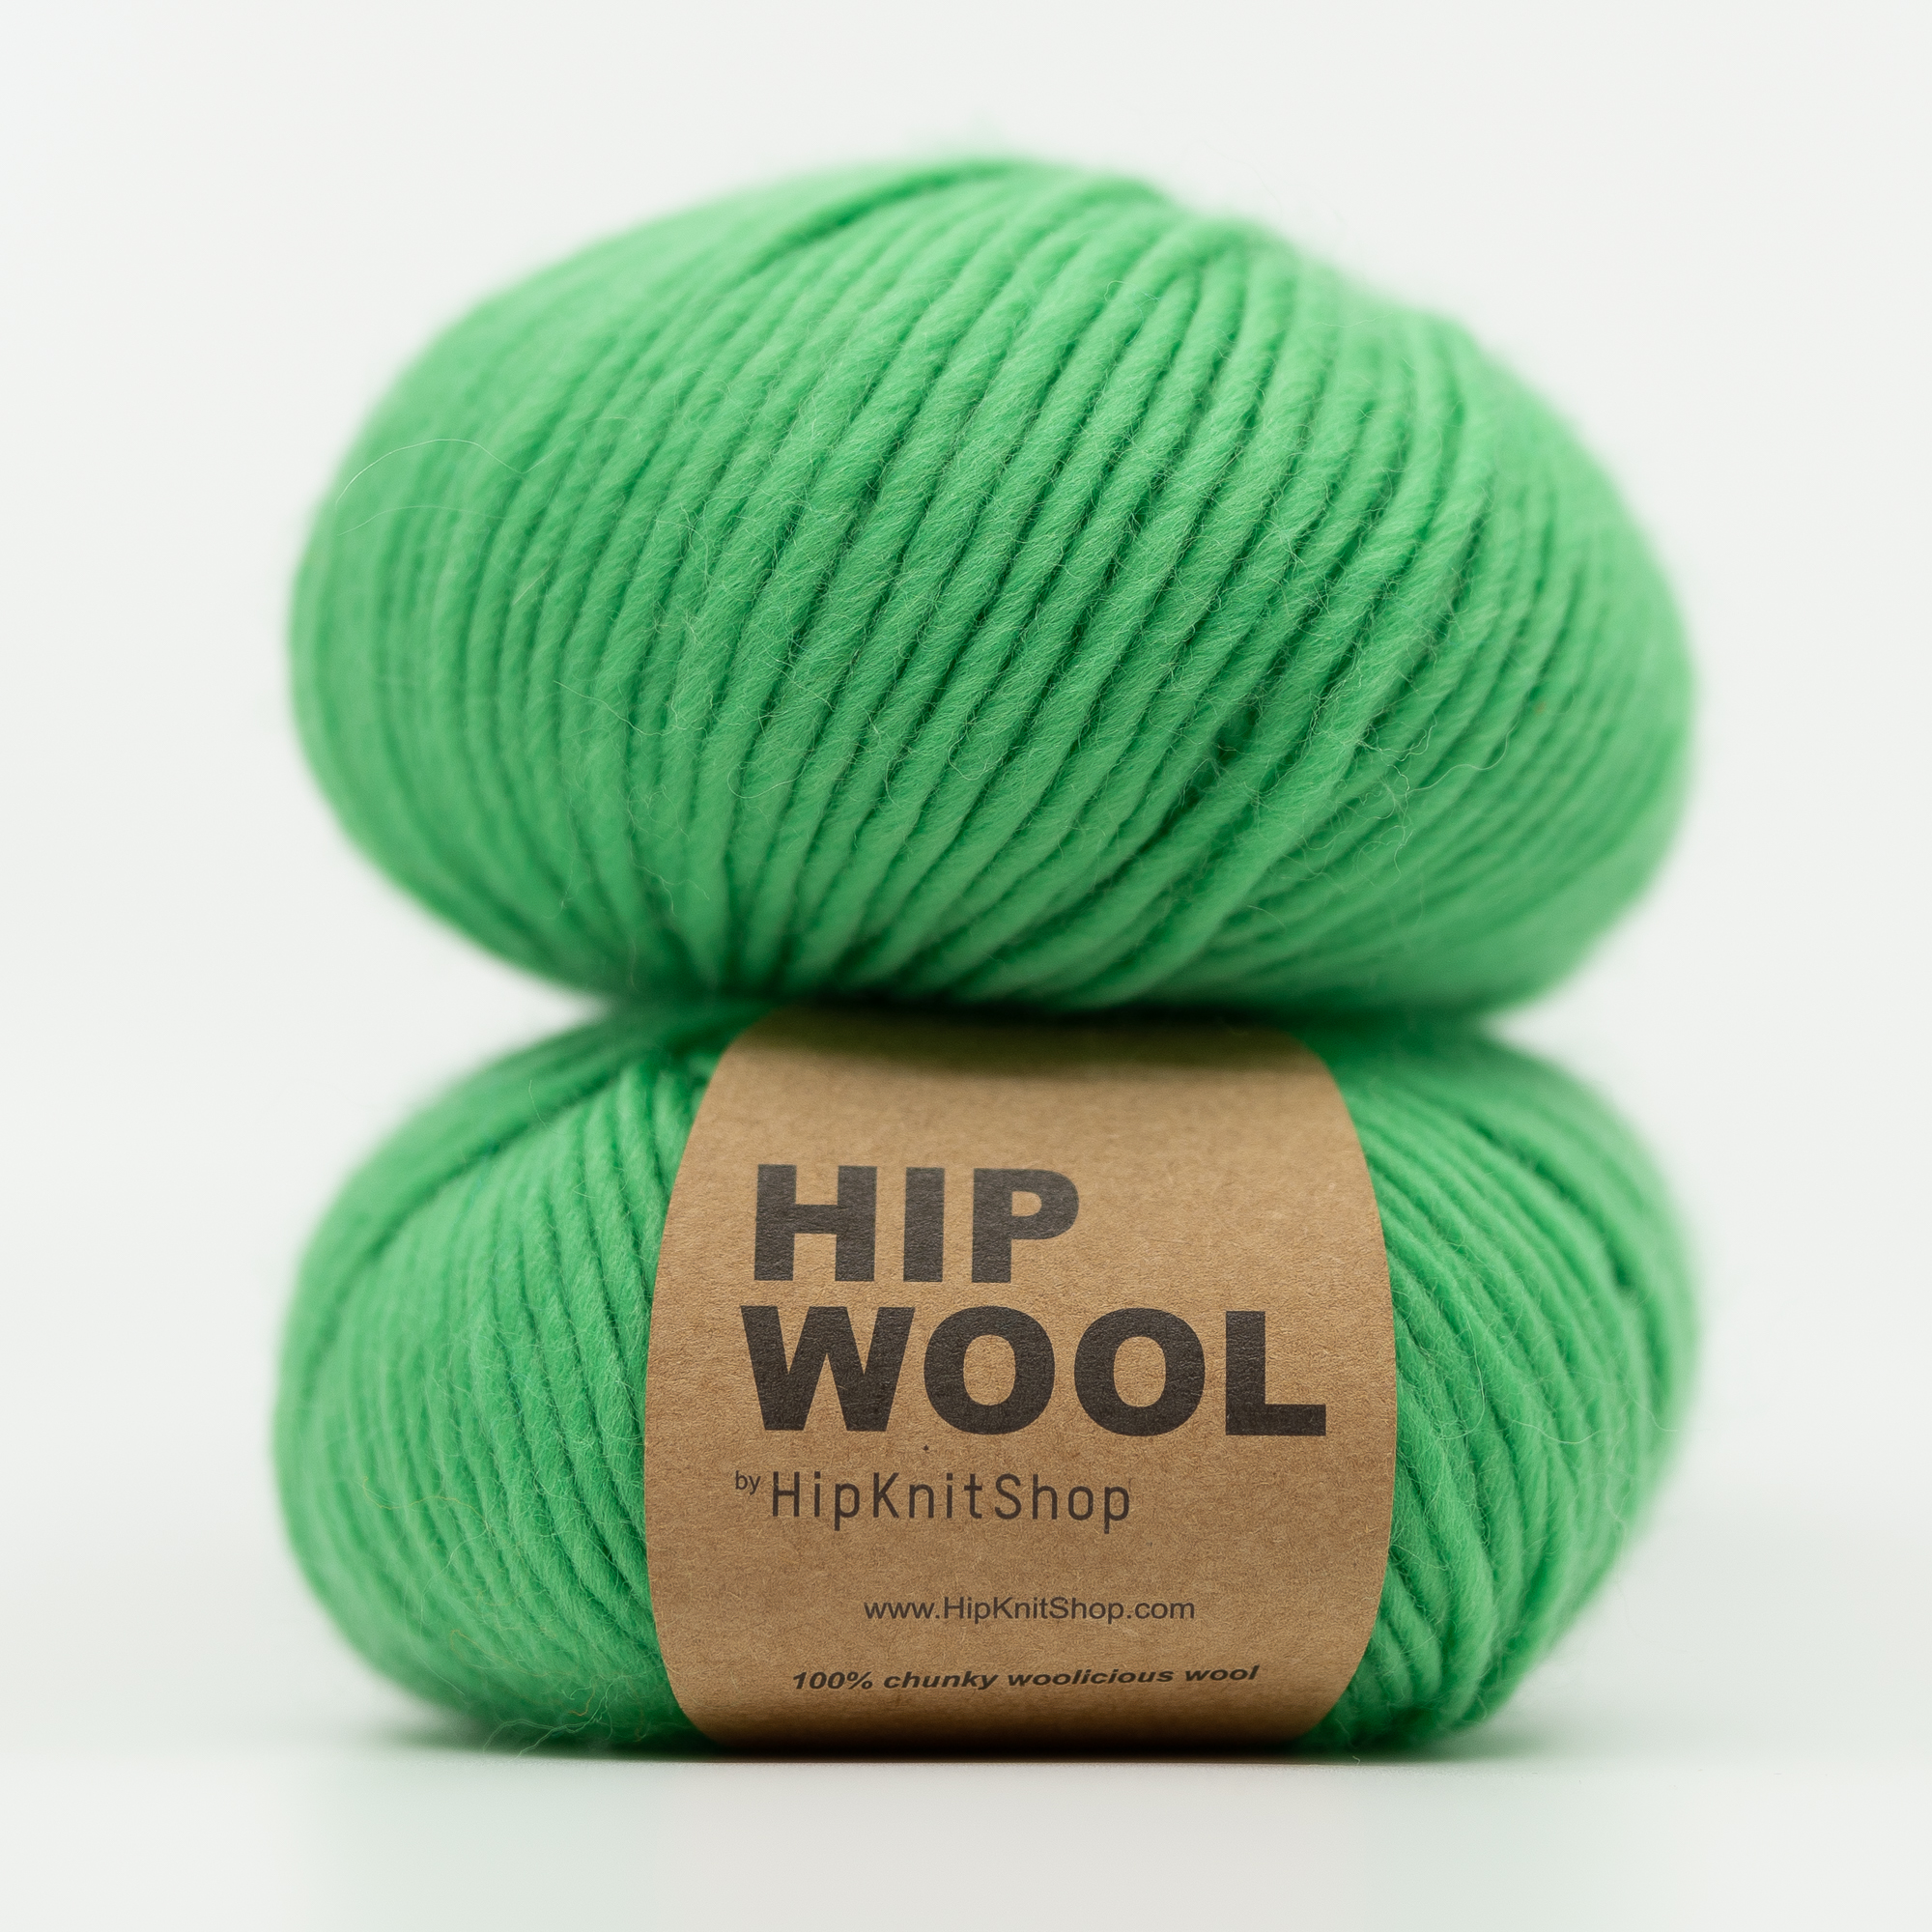  - Jelly bean green | Bright green yarn | Hip Wool - by HipKnitShop - 30/05/2021